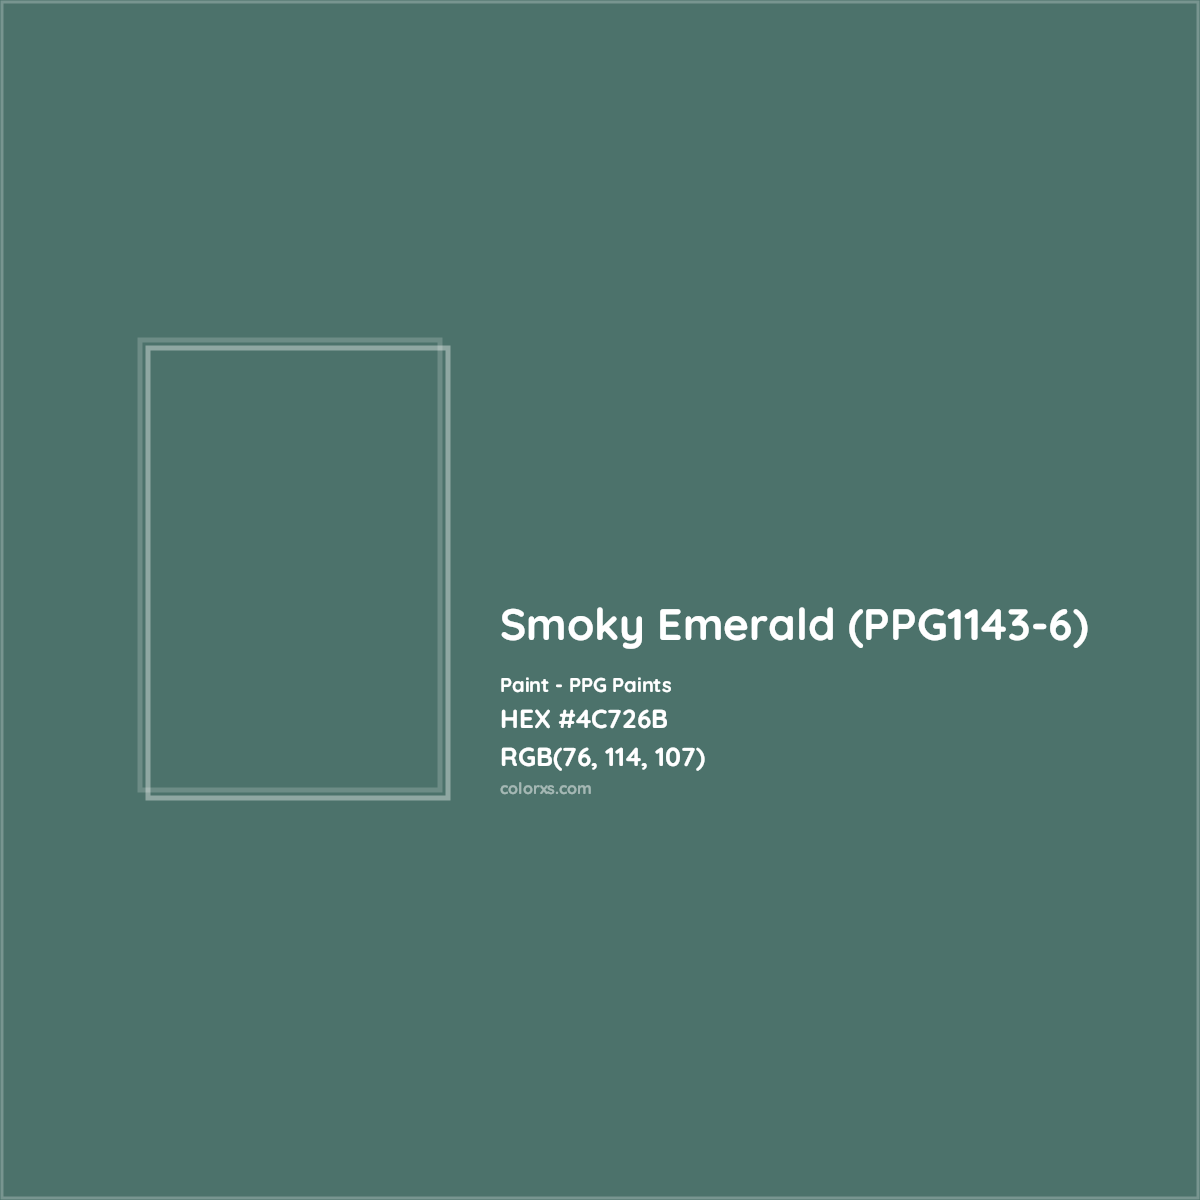 HEX #4C726B Smoky Emerald (PPG1143-6) Paint PPG Paints - Color Code